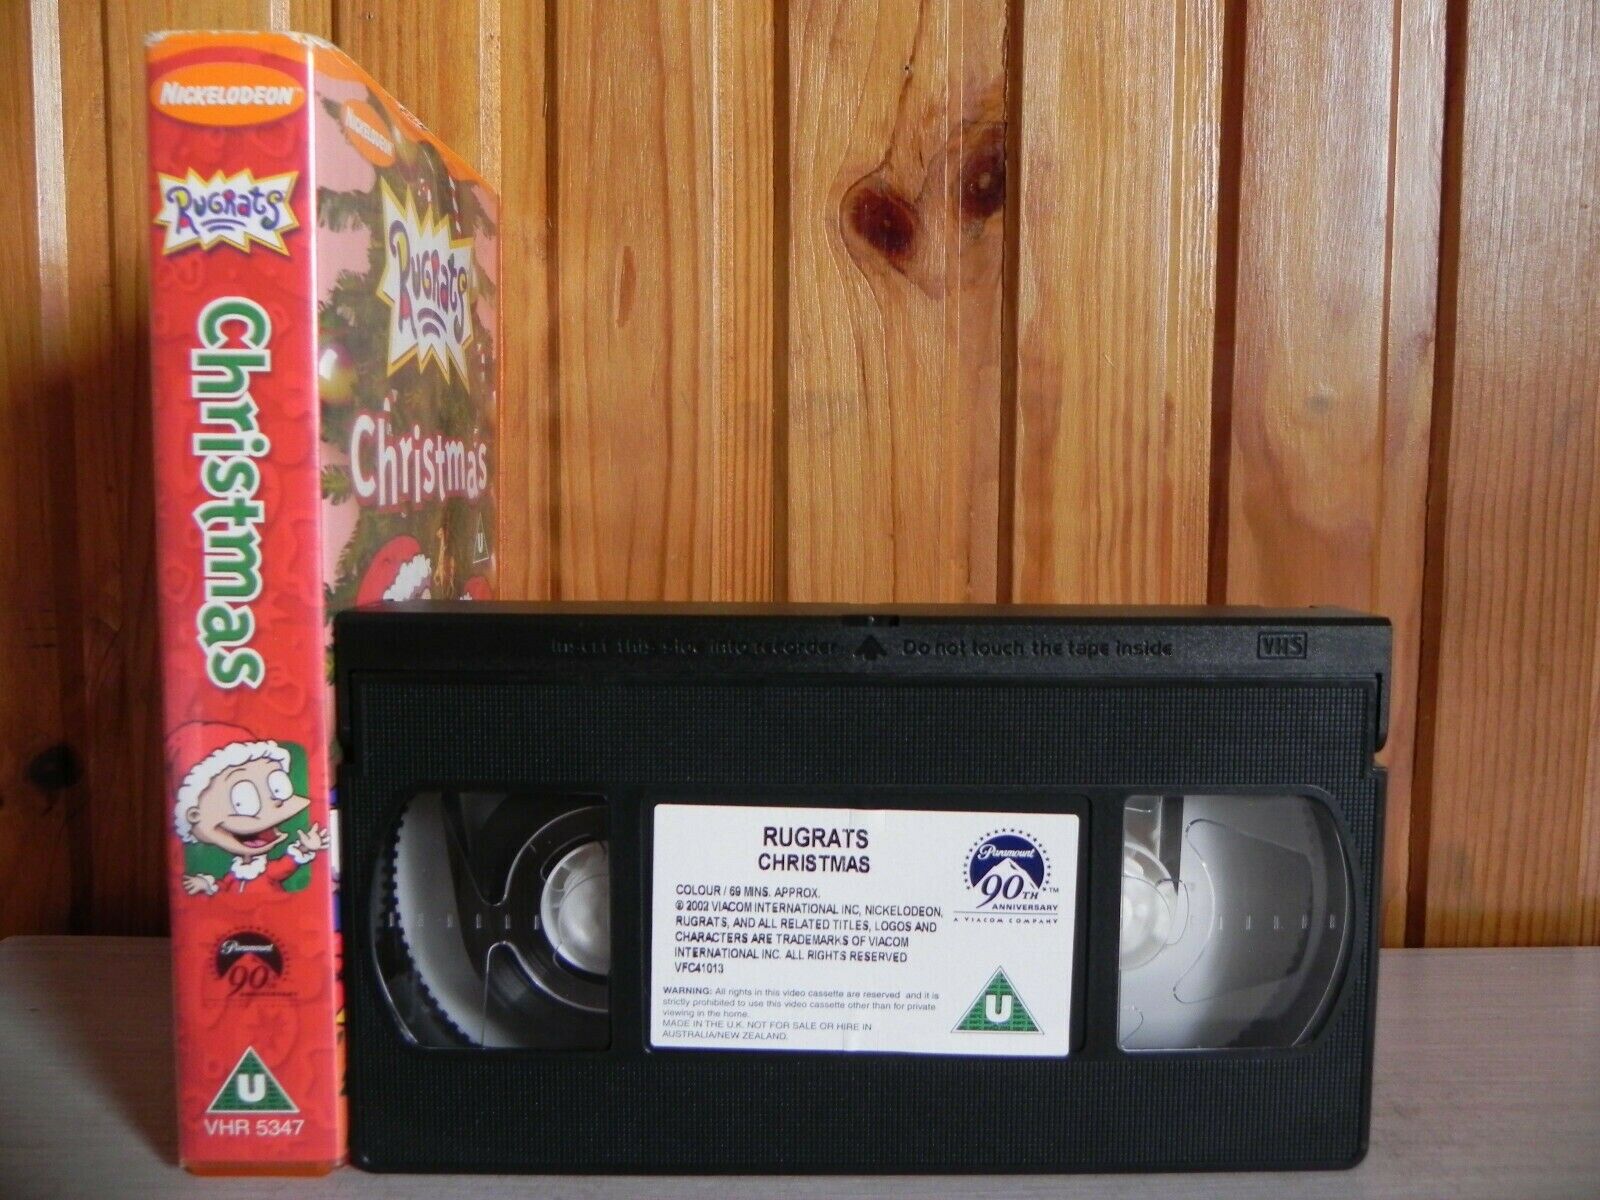 Rugrats - Christmas - Nickelodeon - Babies In Toyland - Rug Rats - Kids - VHS-